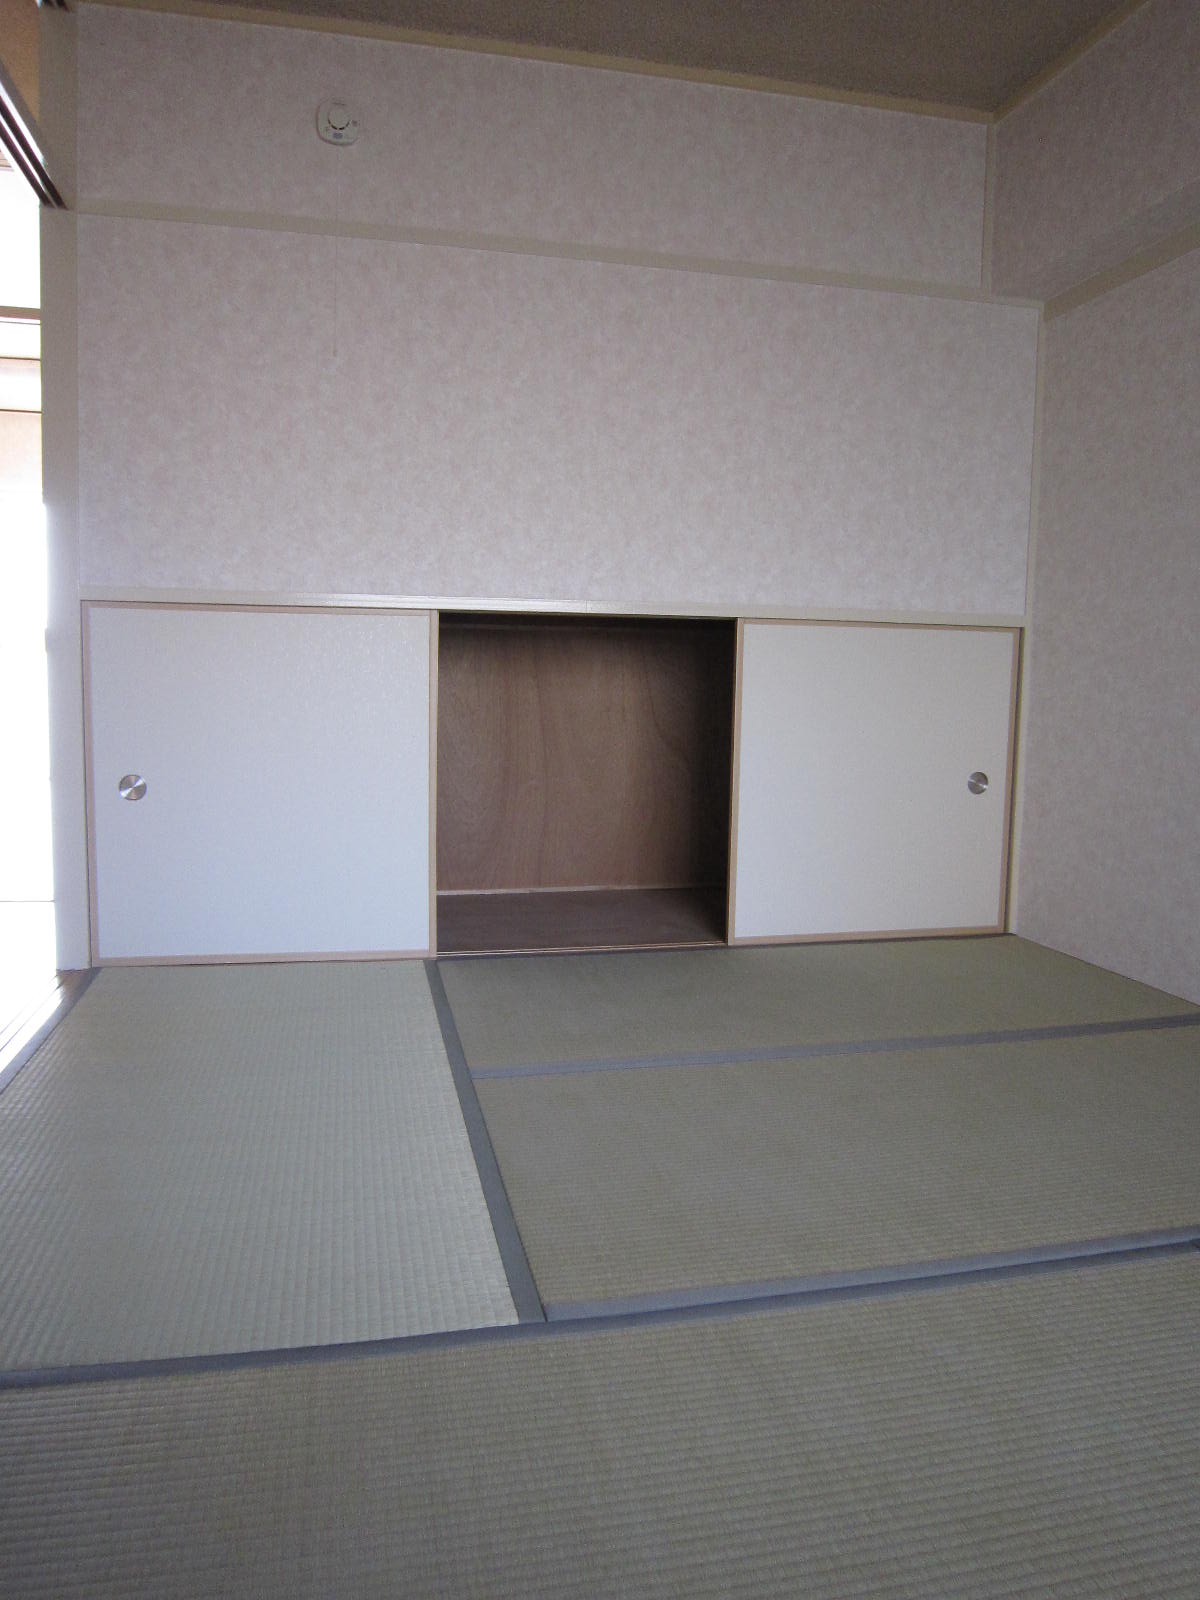 Receipt. Closet Japanese-style room